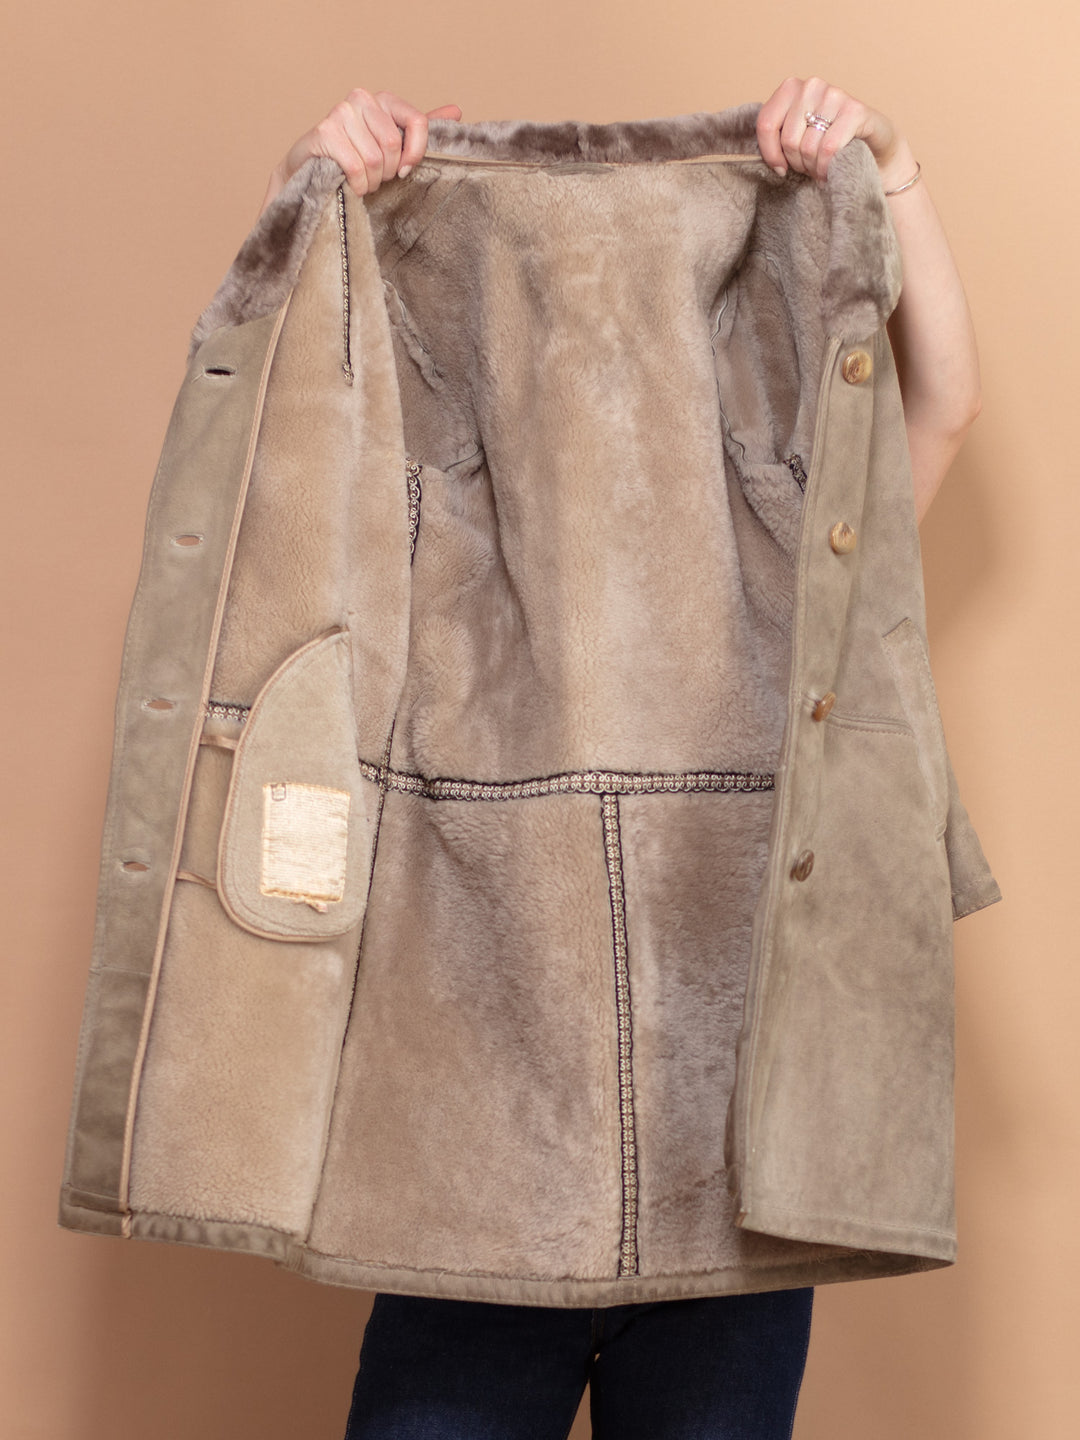 Sheepskin Shearl Coat, Size Medium, Vintage 70's Brown Sheepskin Fur Winter Coat, Sheepskin Suede Coat, Boho Western Hippie Style Outerwear